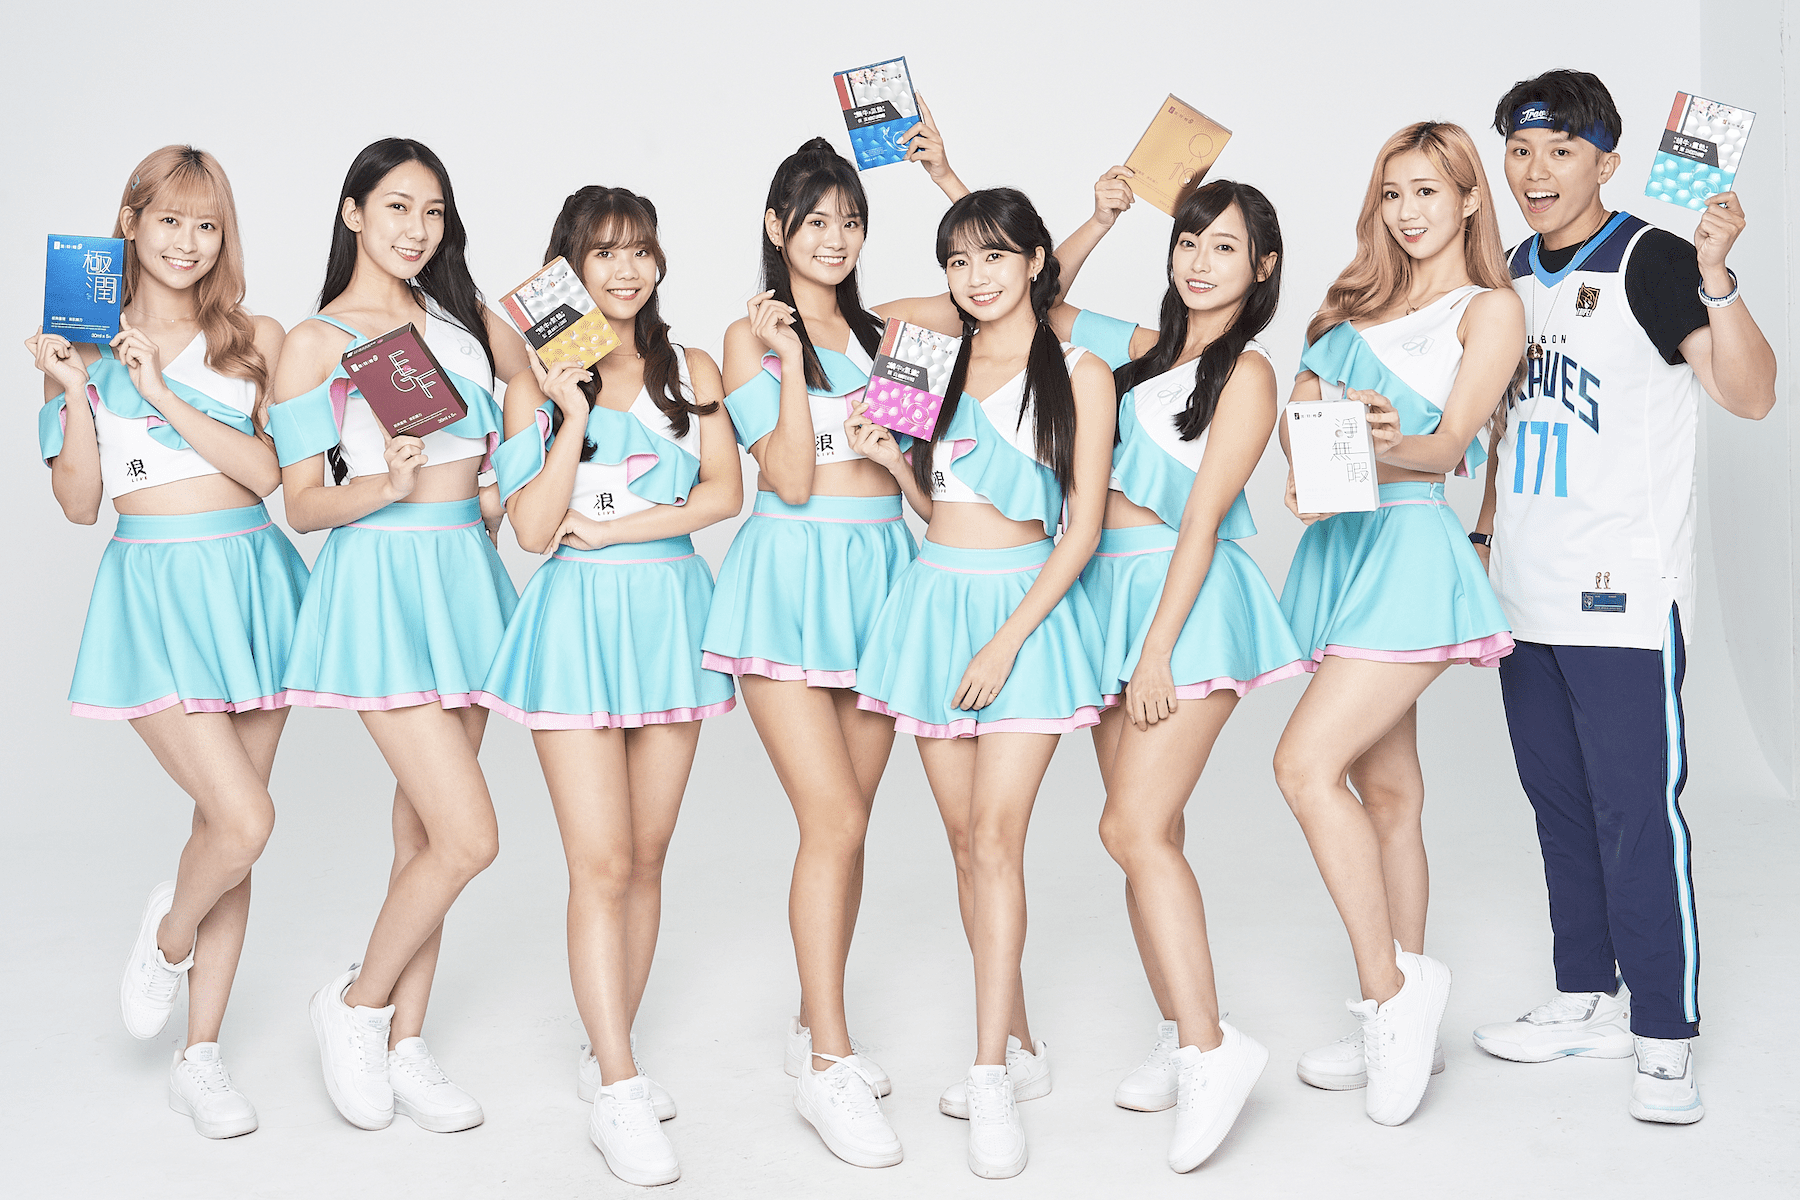 Fubon Angels耀眼登場     啦啦隊首度售票演唱會     21位女孩秀才藝震撼粉絲